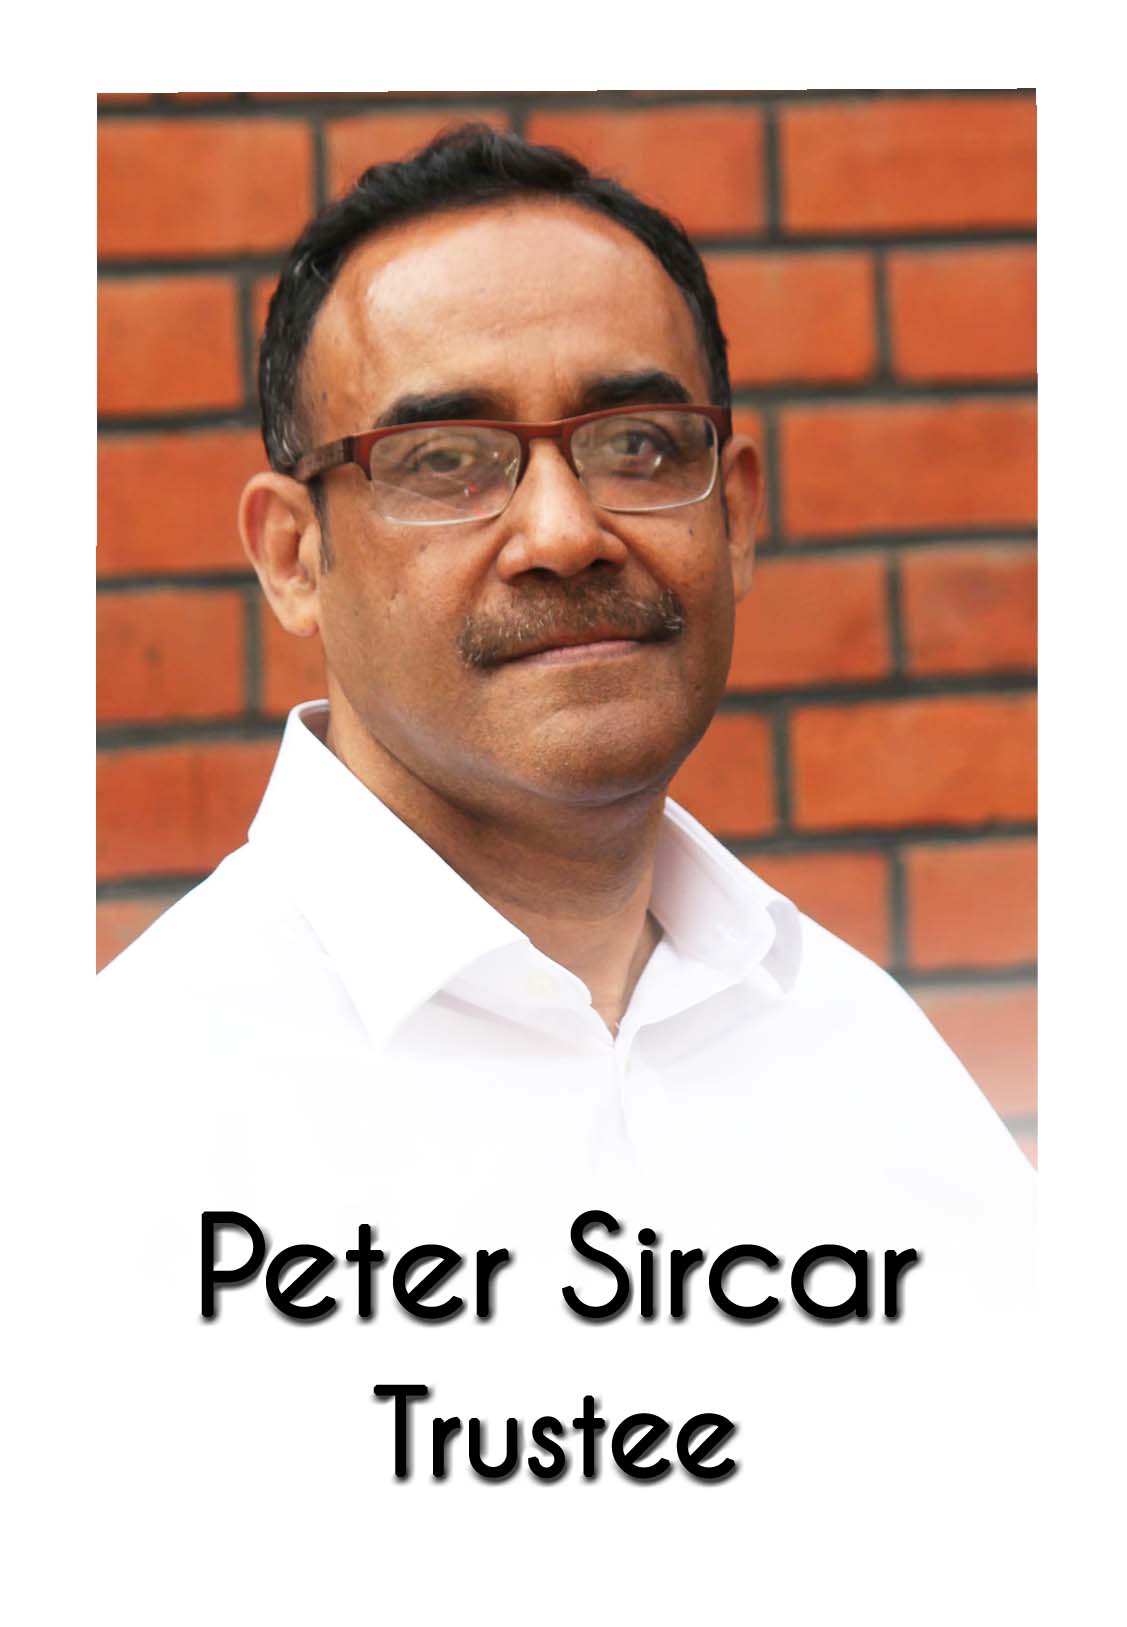 Peter Sircar labelled